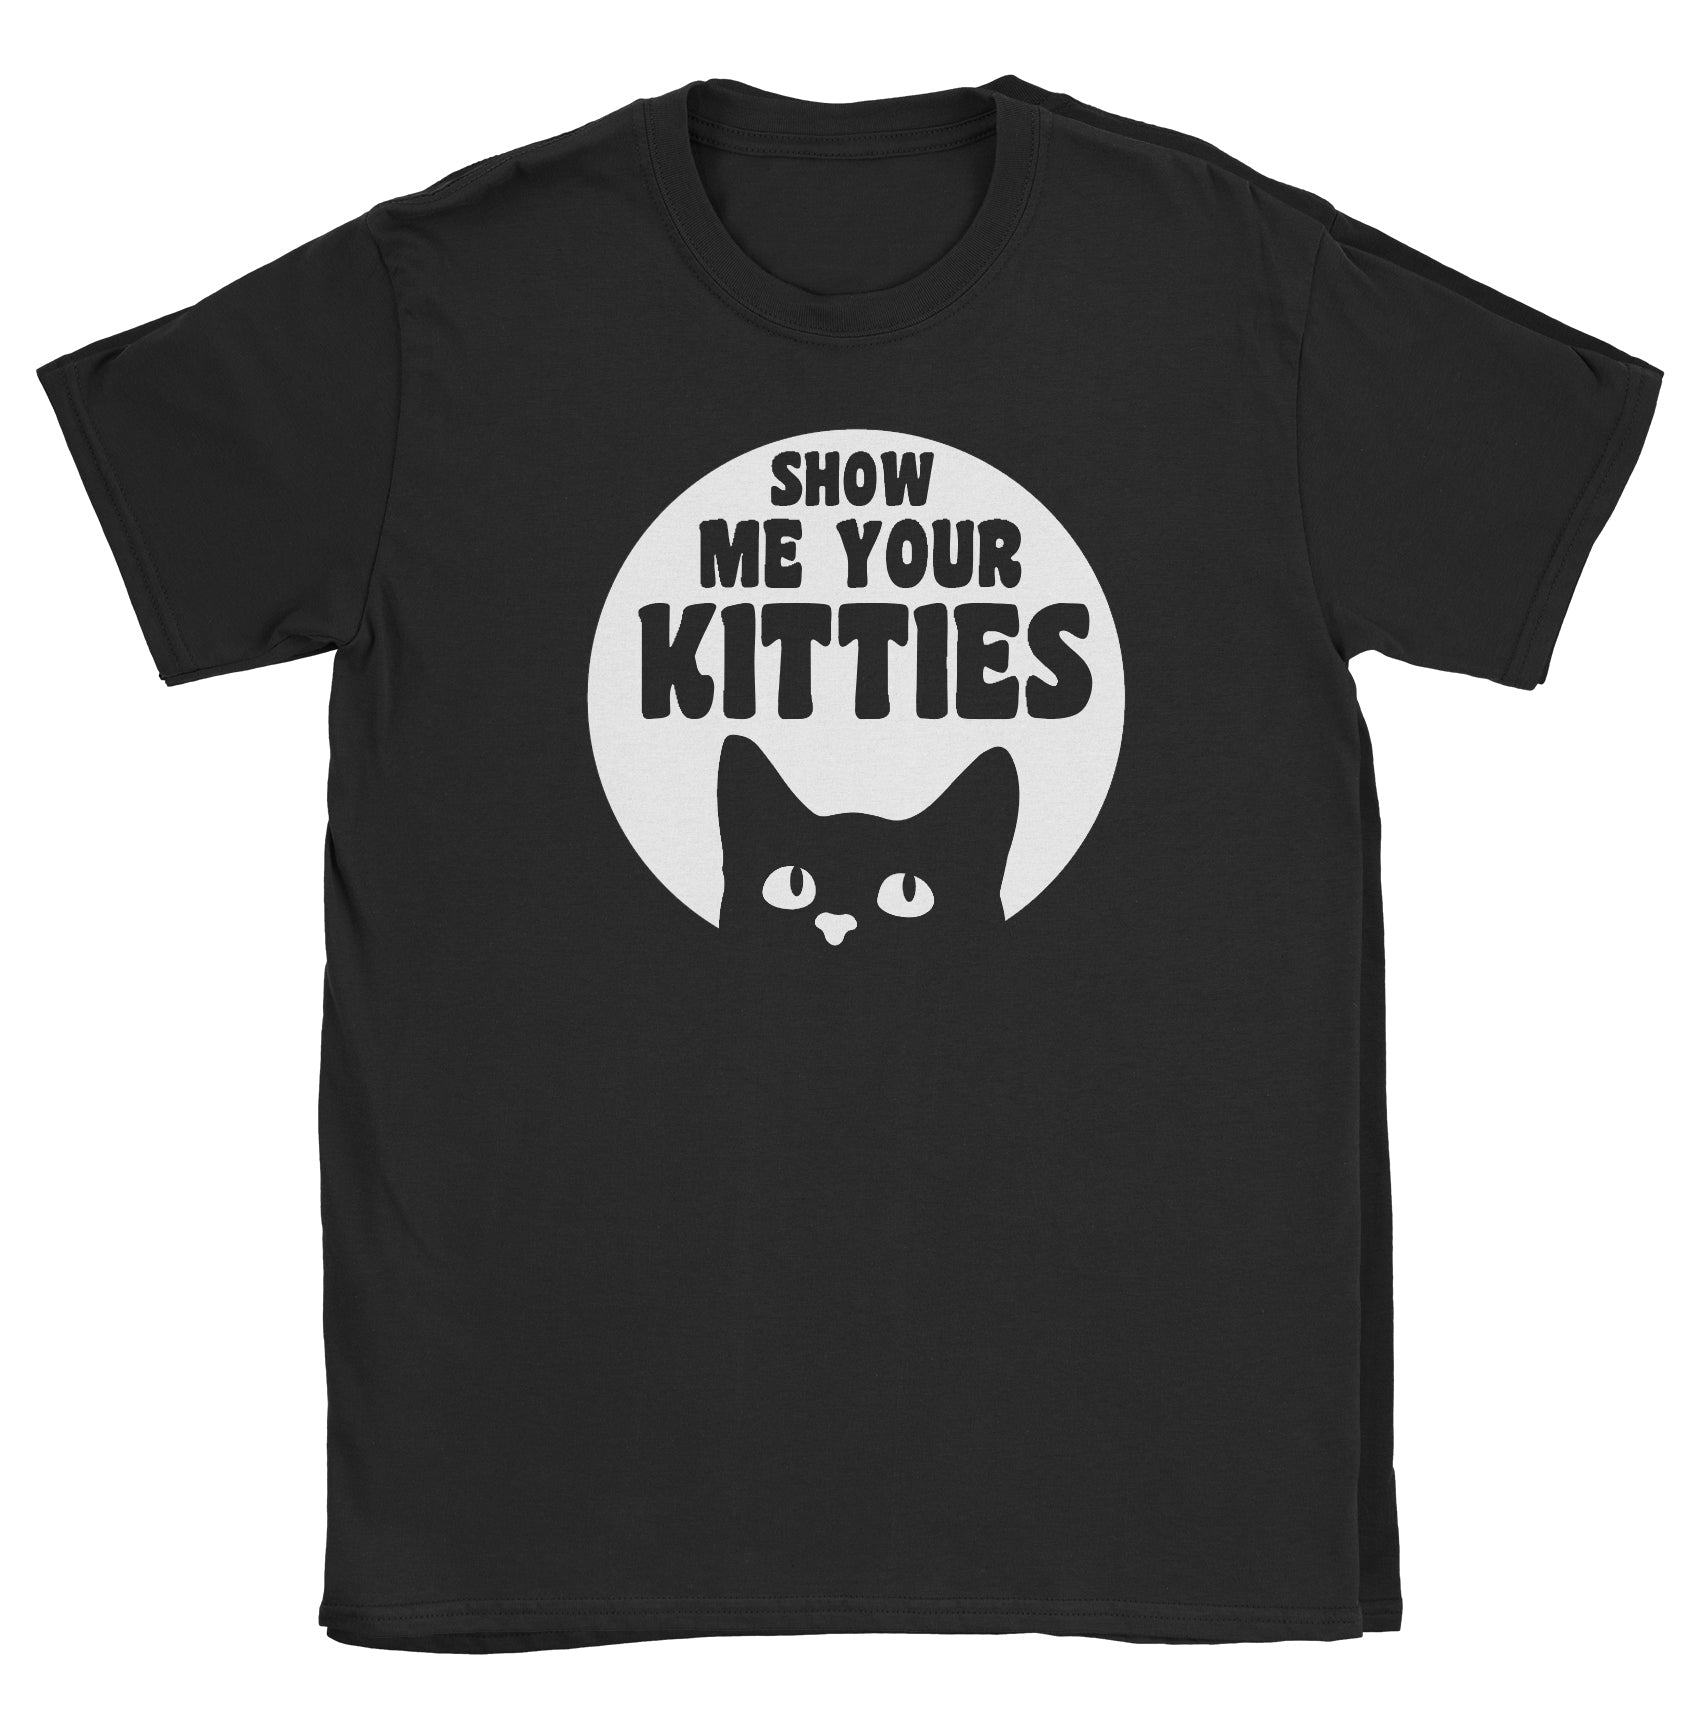 Show me your KITTIES! - Black Cat MFG -